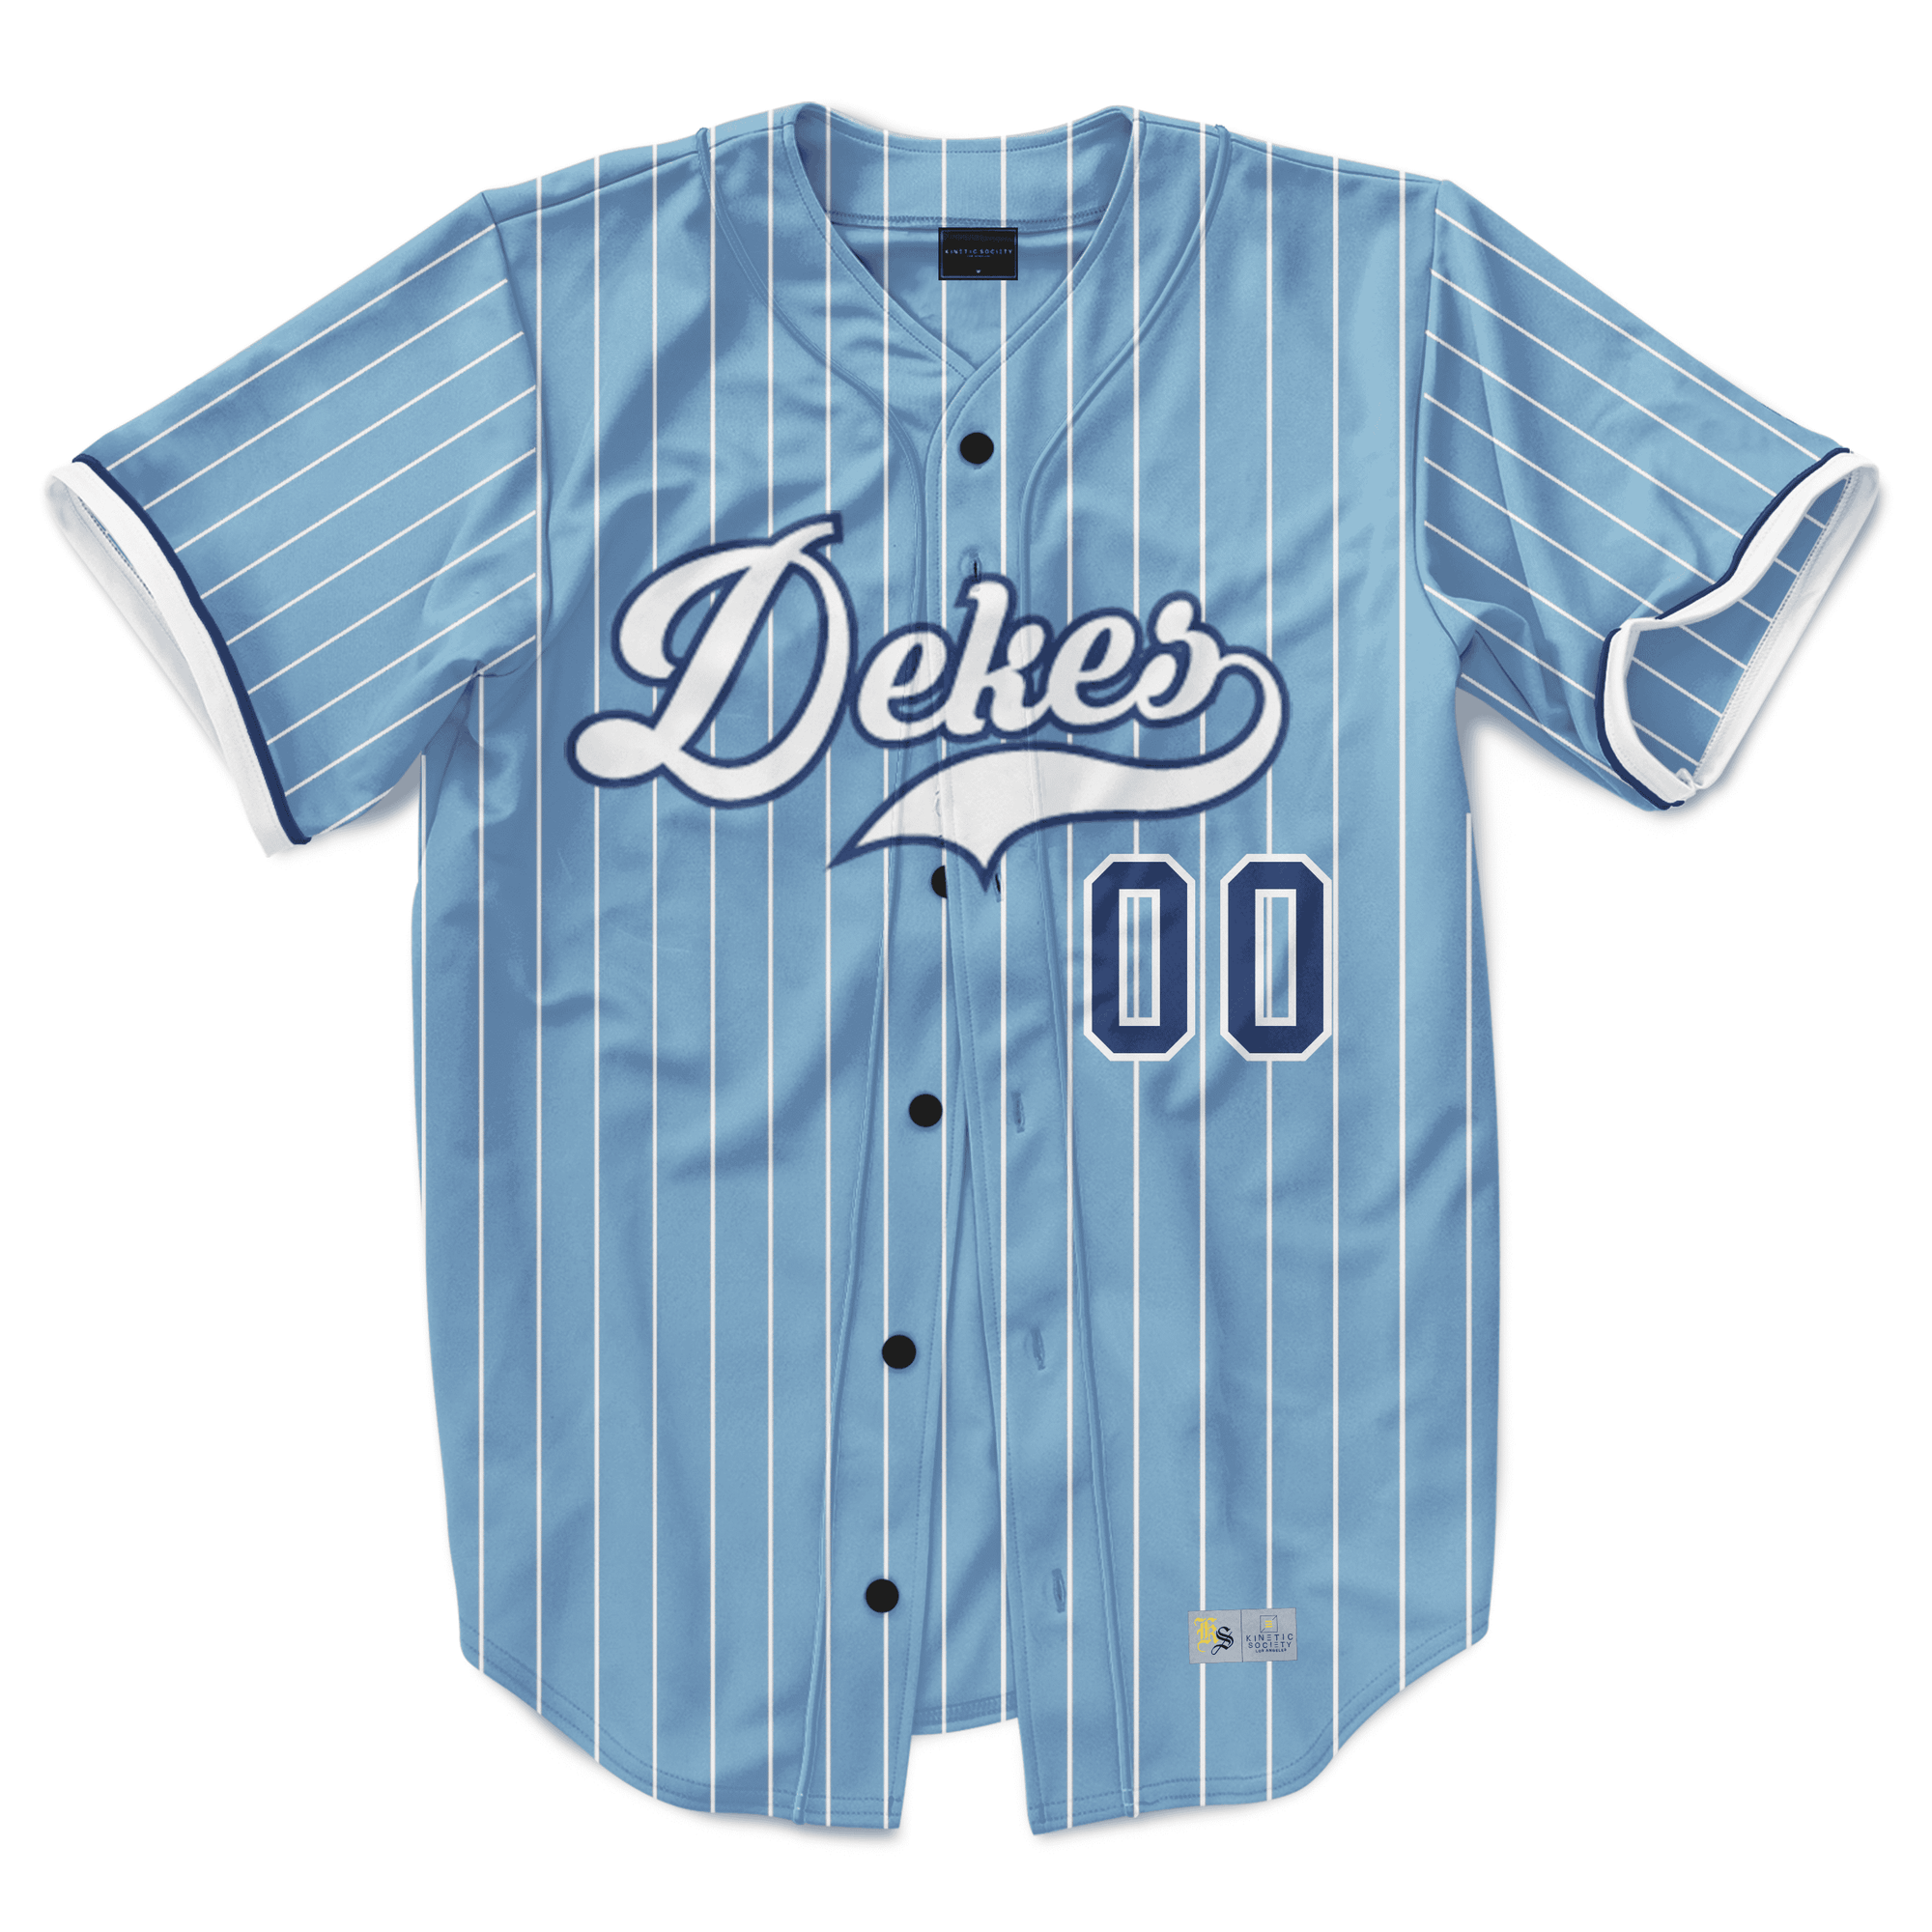 Delta Kappa Epsilon - Blue Shade Baseball Jersey